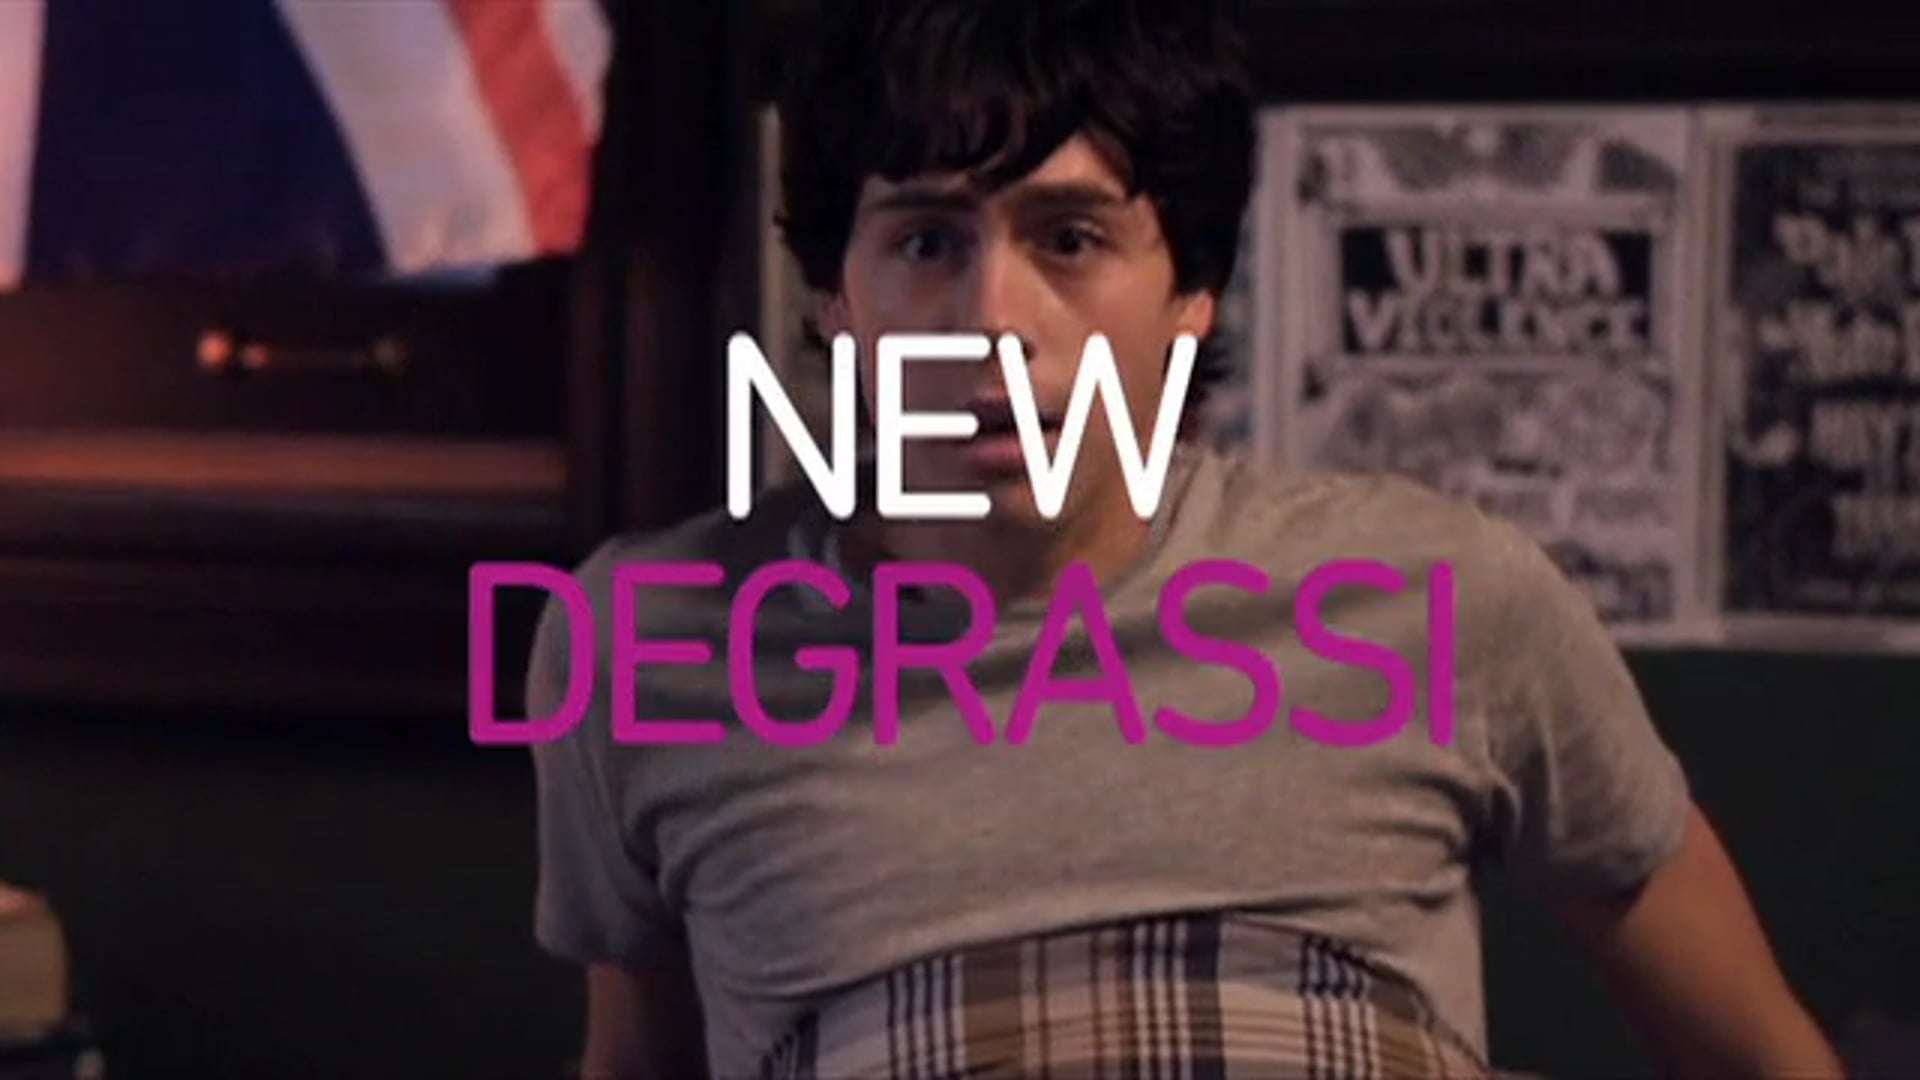 Degrassi season 12c trailer